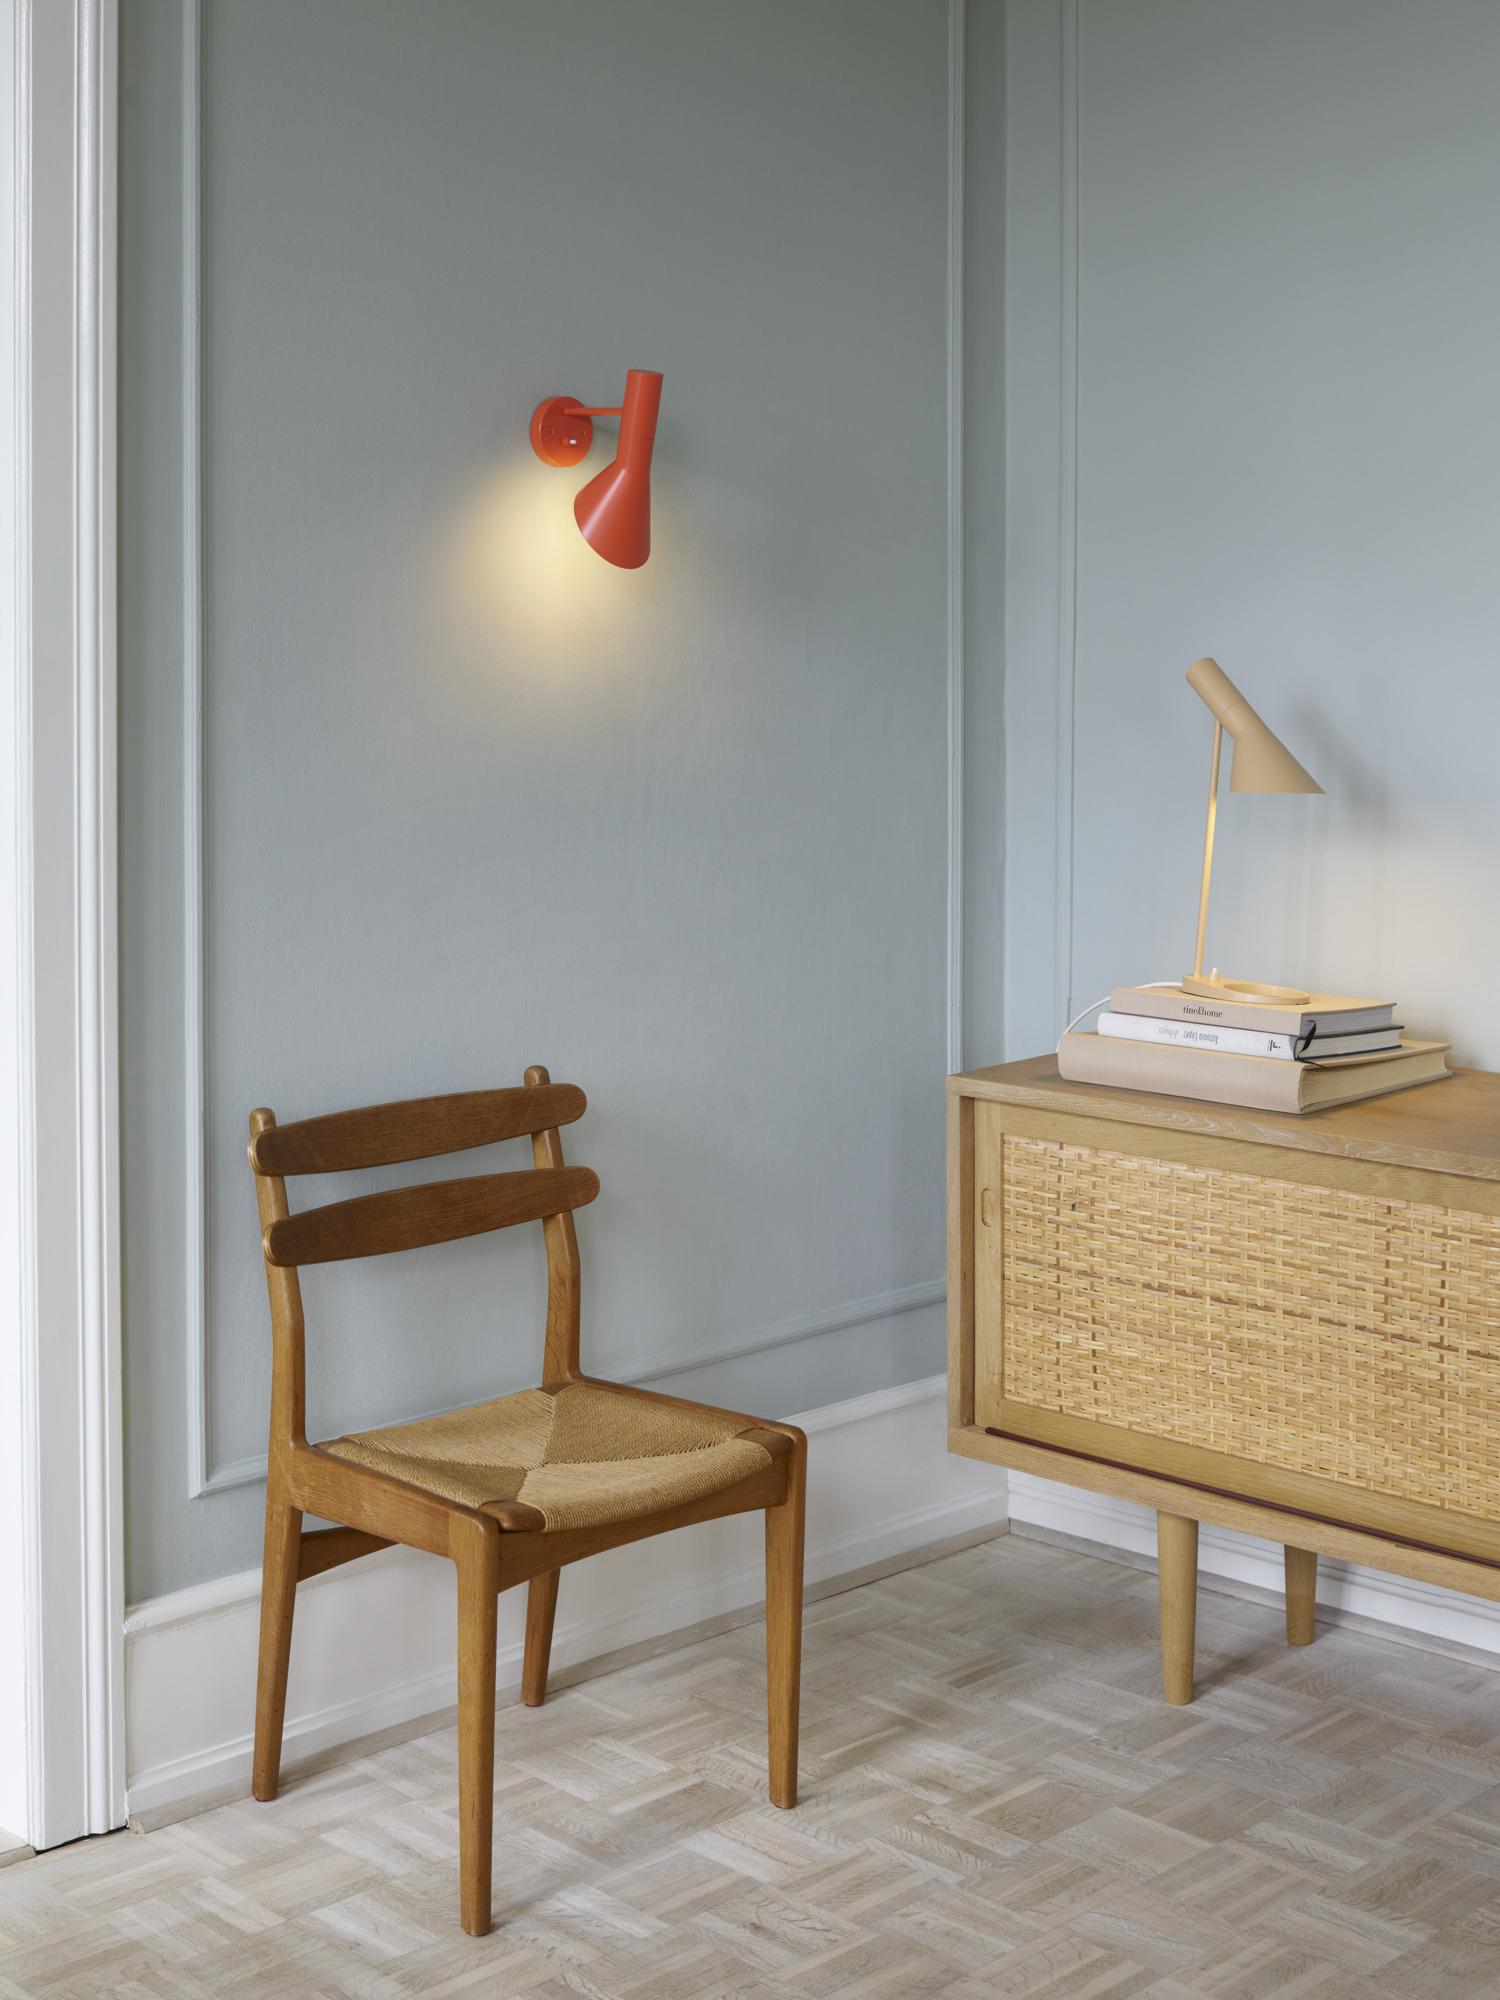 Arne Jacobsen 'Aj Mini' Table Lamp in Electric Orange for Louis Poulsen For Sale 11